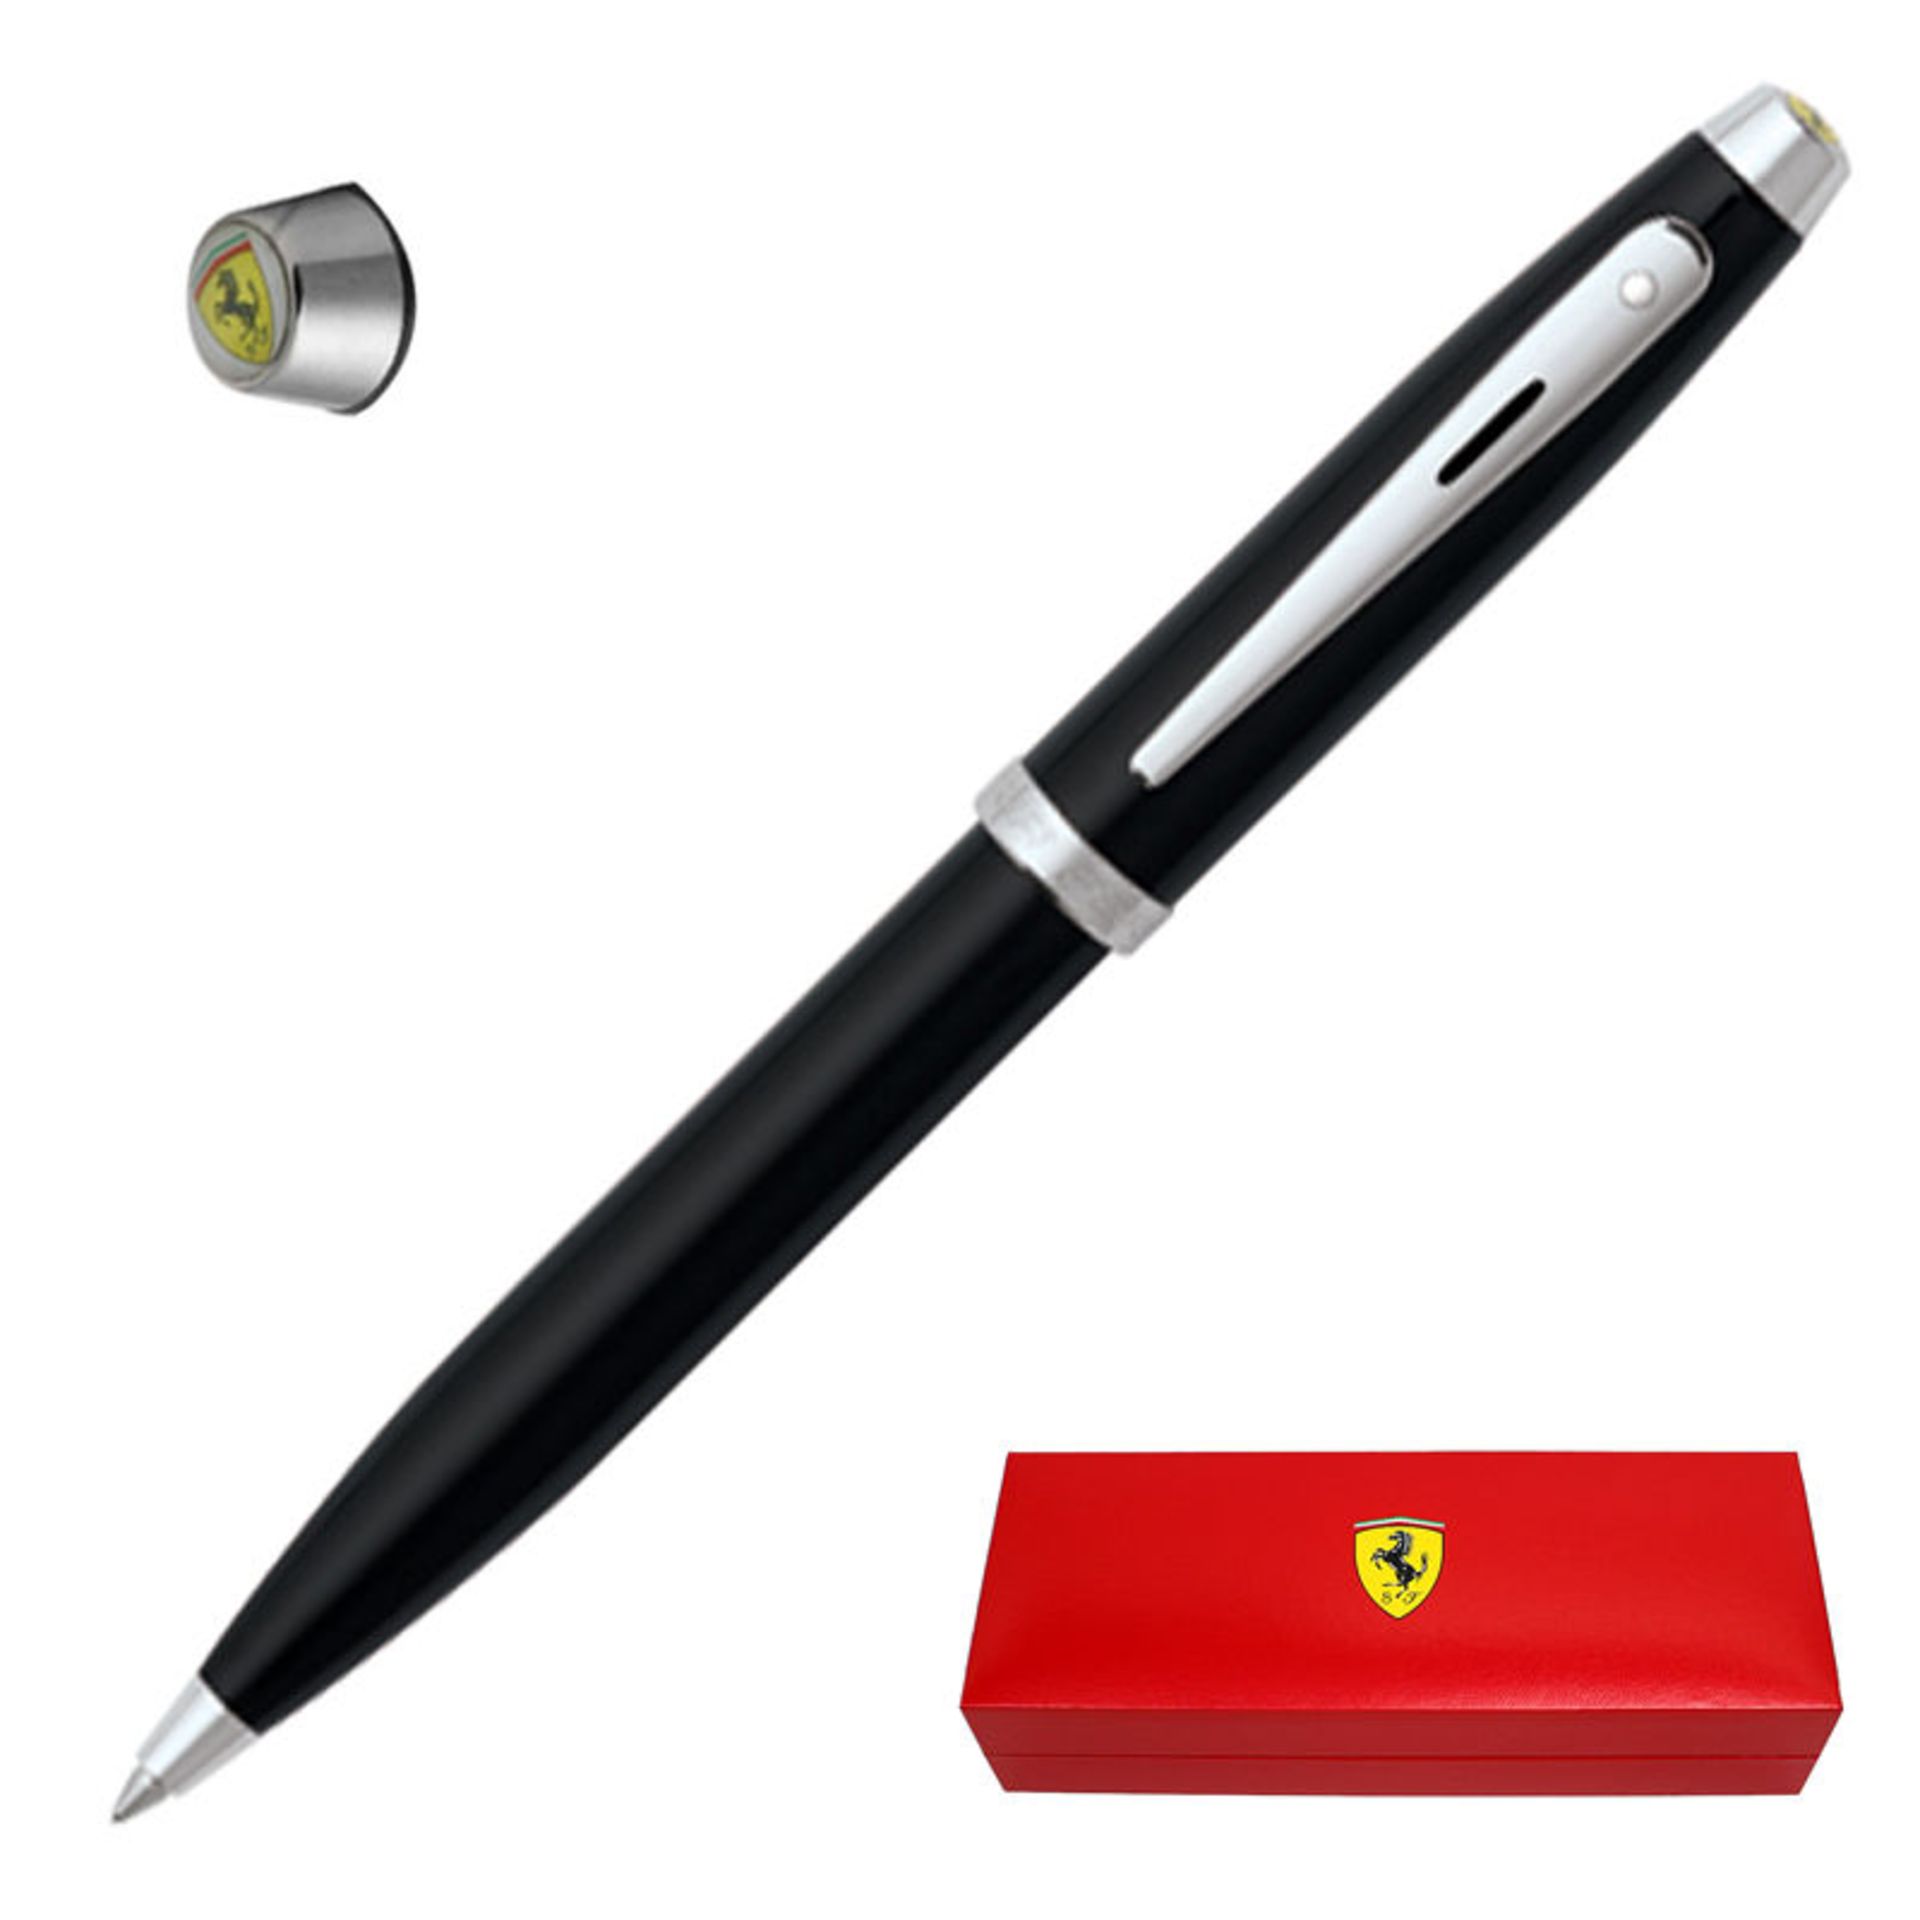 V Brand New Ferrari VFM Sheaffer Ballpoint pen in Presentation Box - eBay Price £48.93